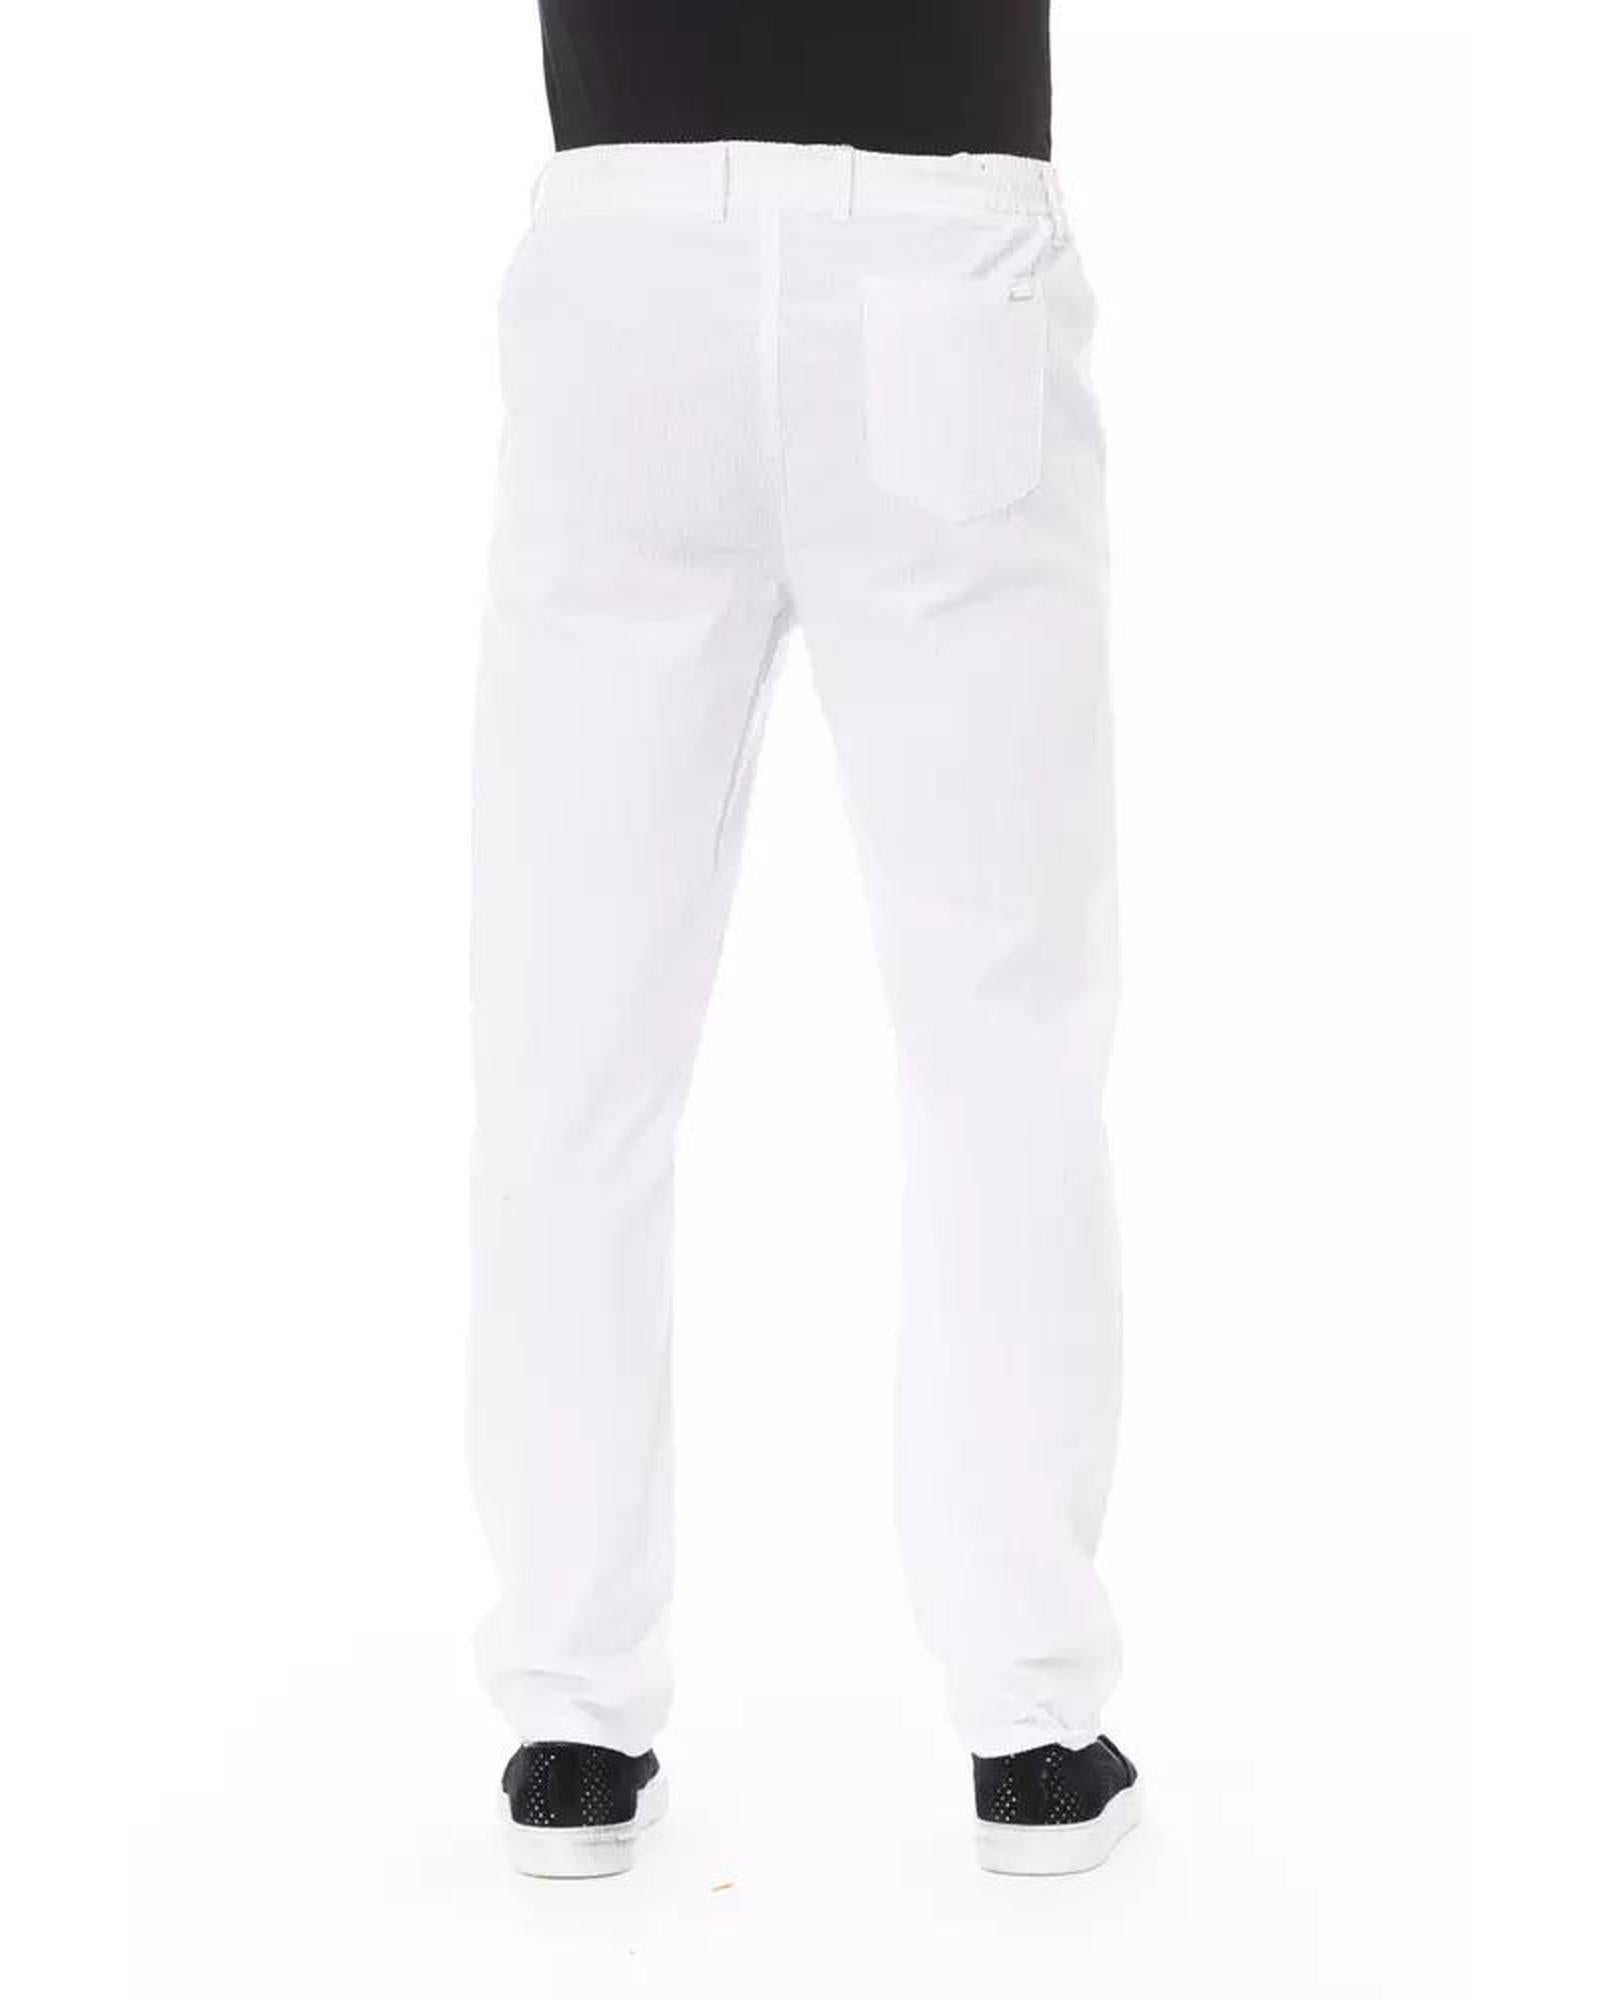 Men's White Cotton Jeans & Pant - W32 US